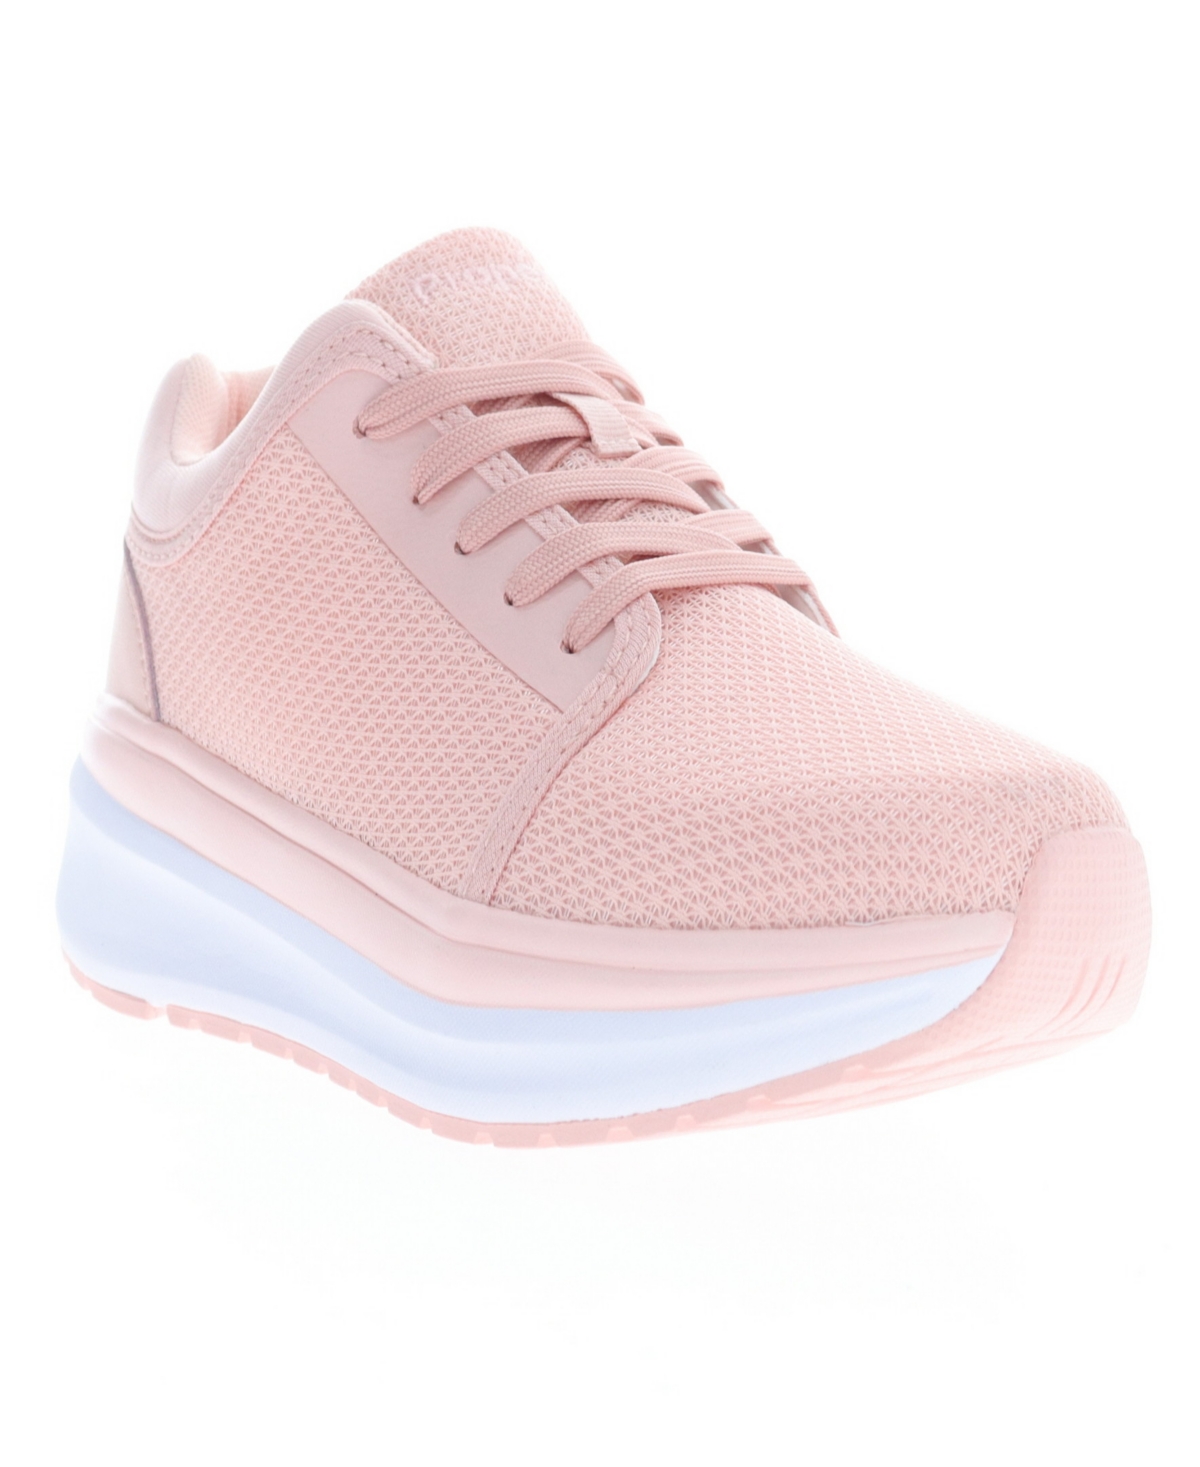 Women's Ultima X Sneakers - Pink